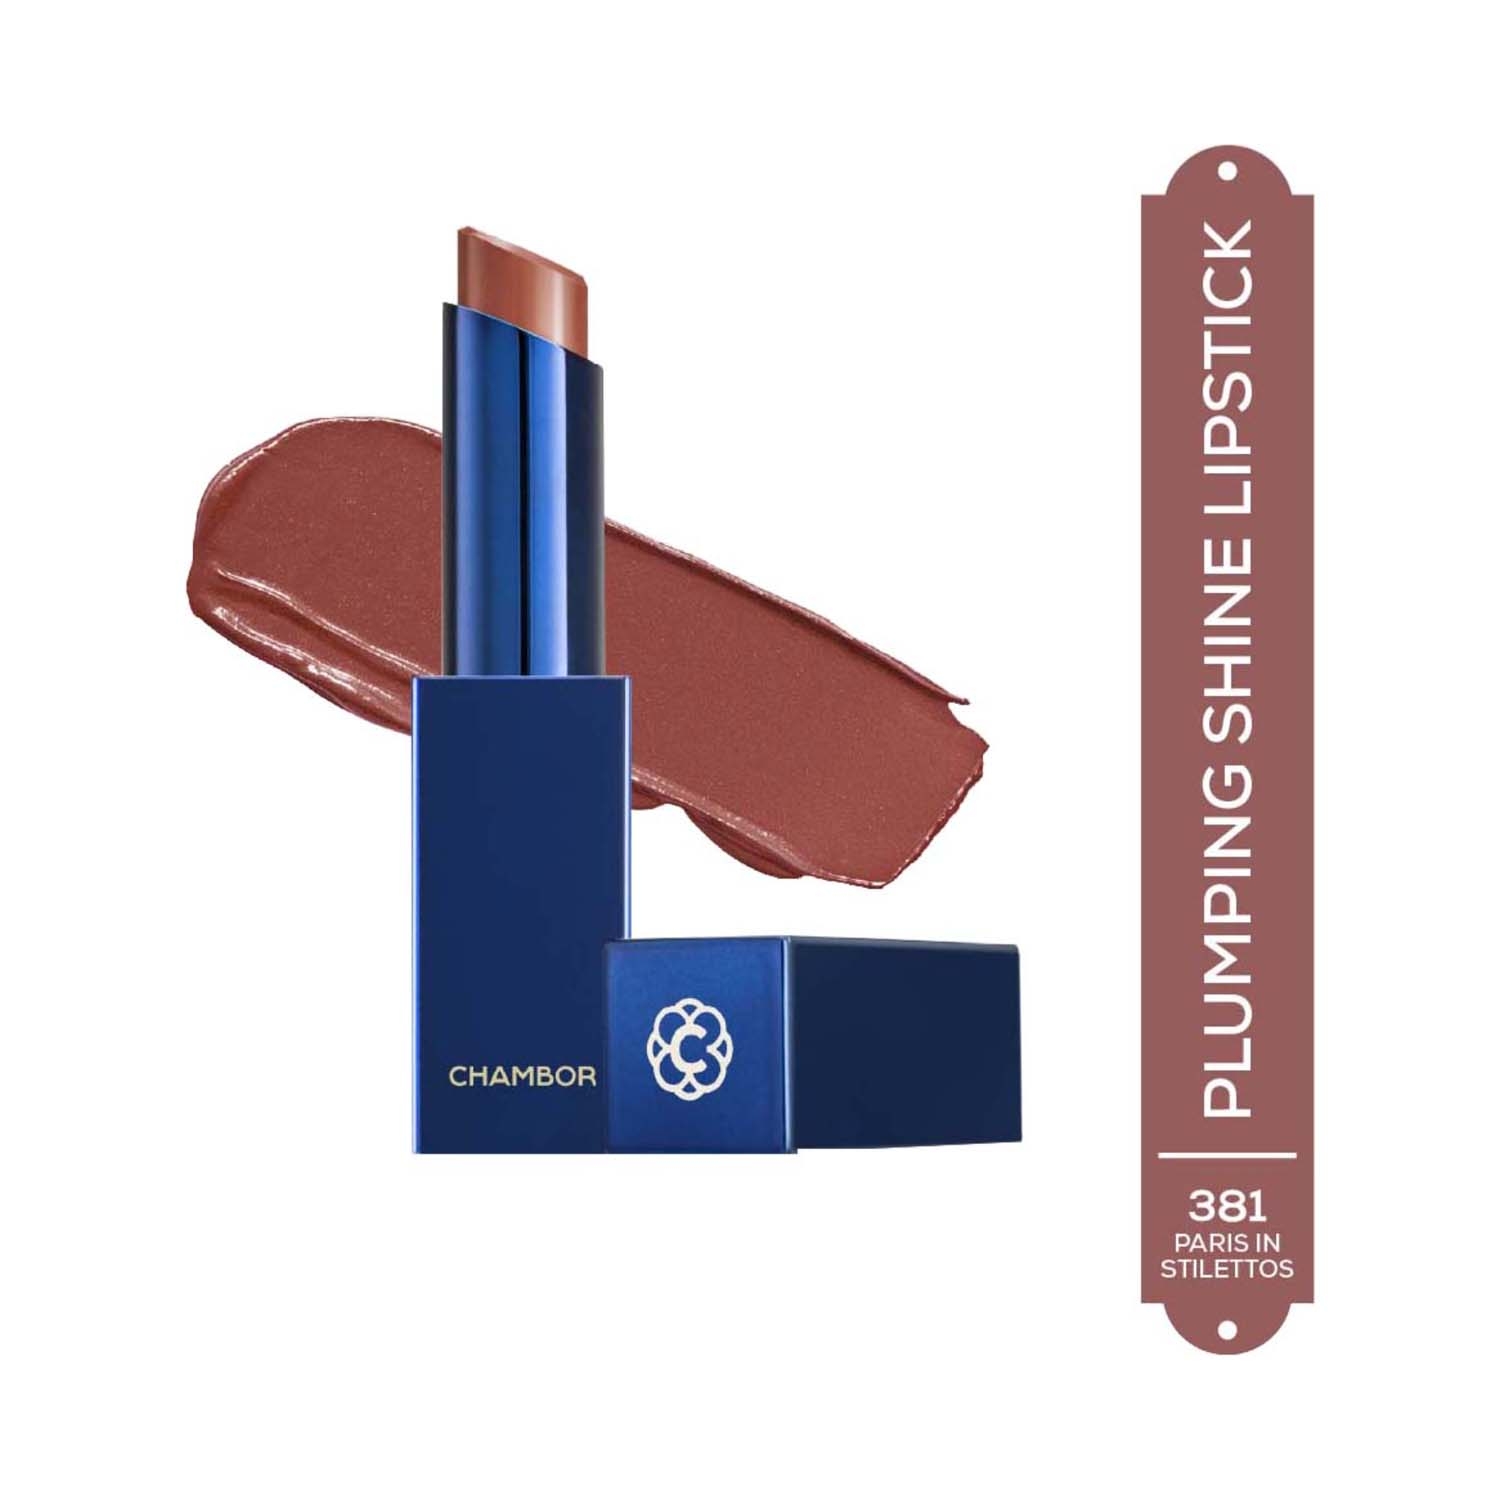 Chambor | Chambor Tres Shine Plump++ Lipstick - 381 Paris in Stilettos (3g)